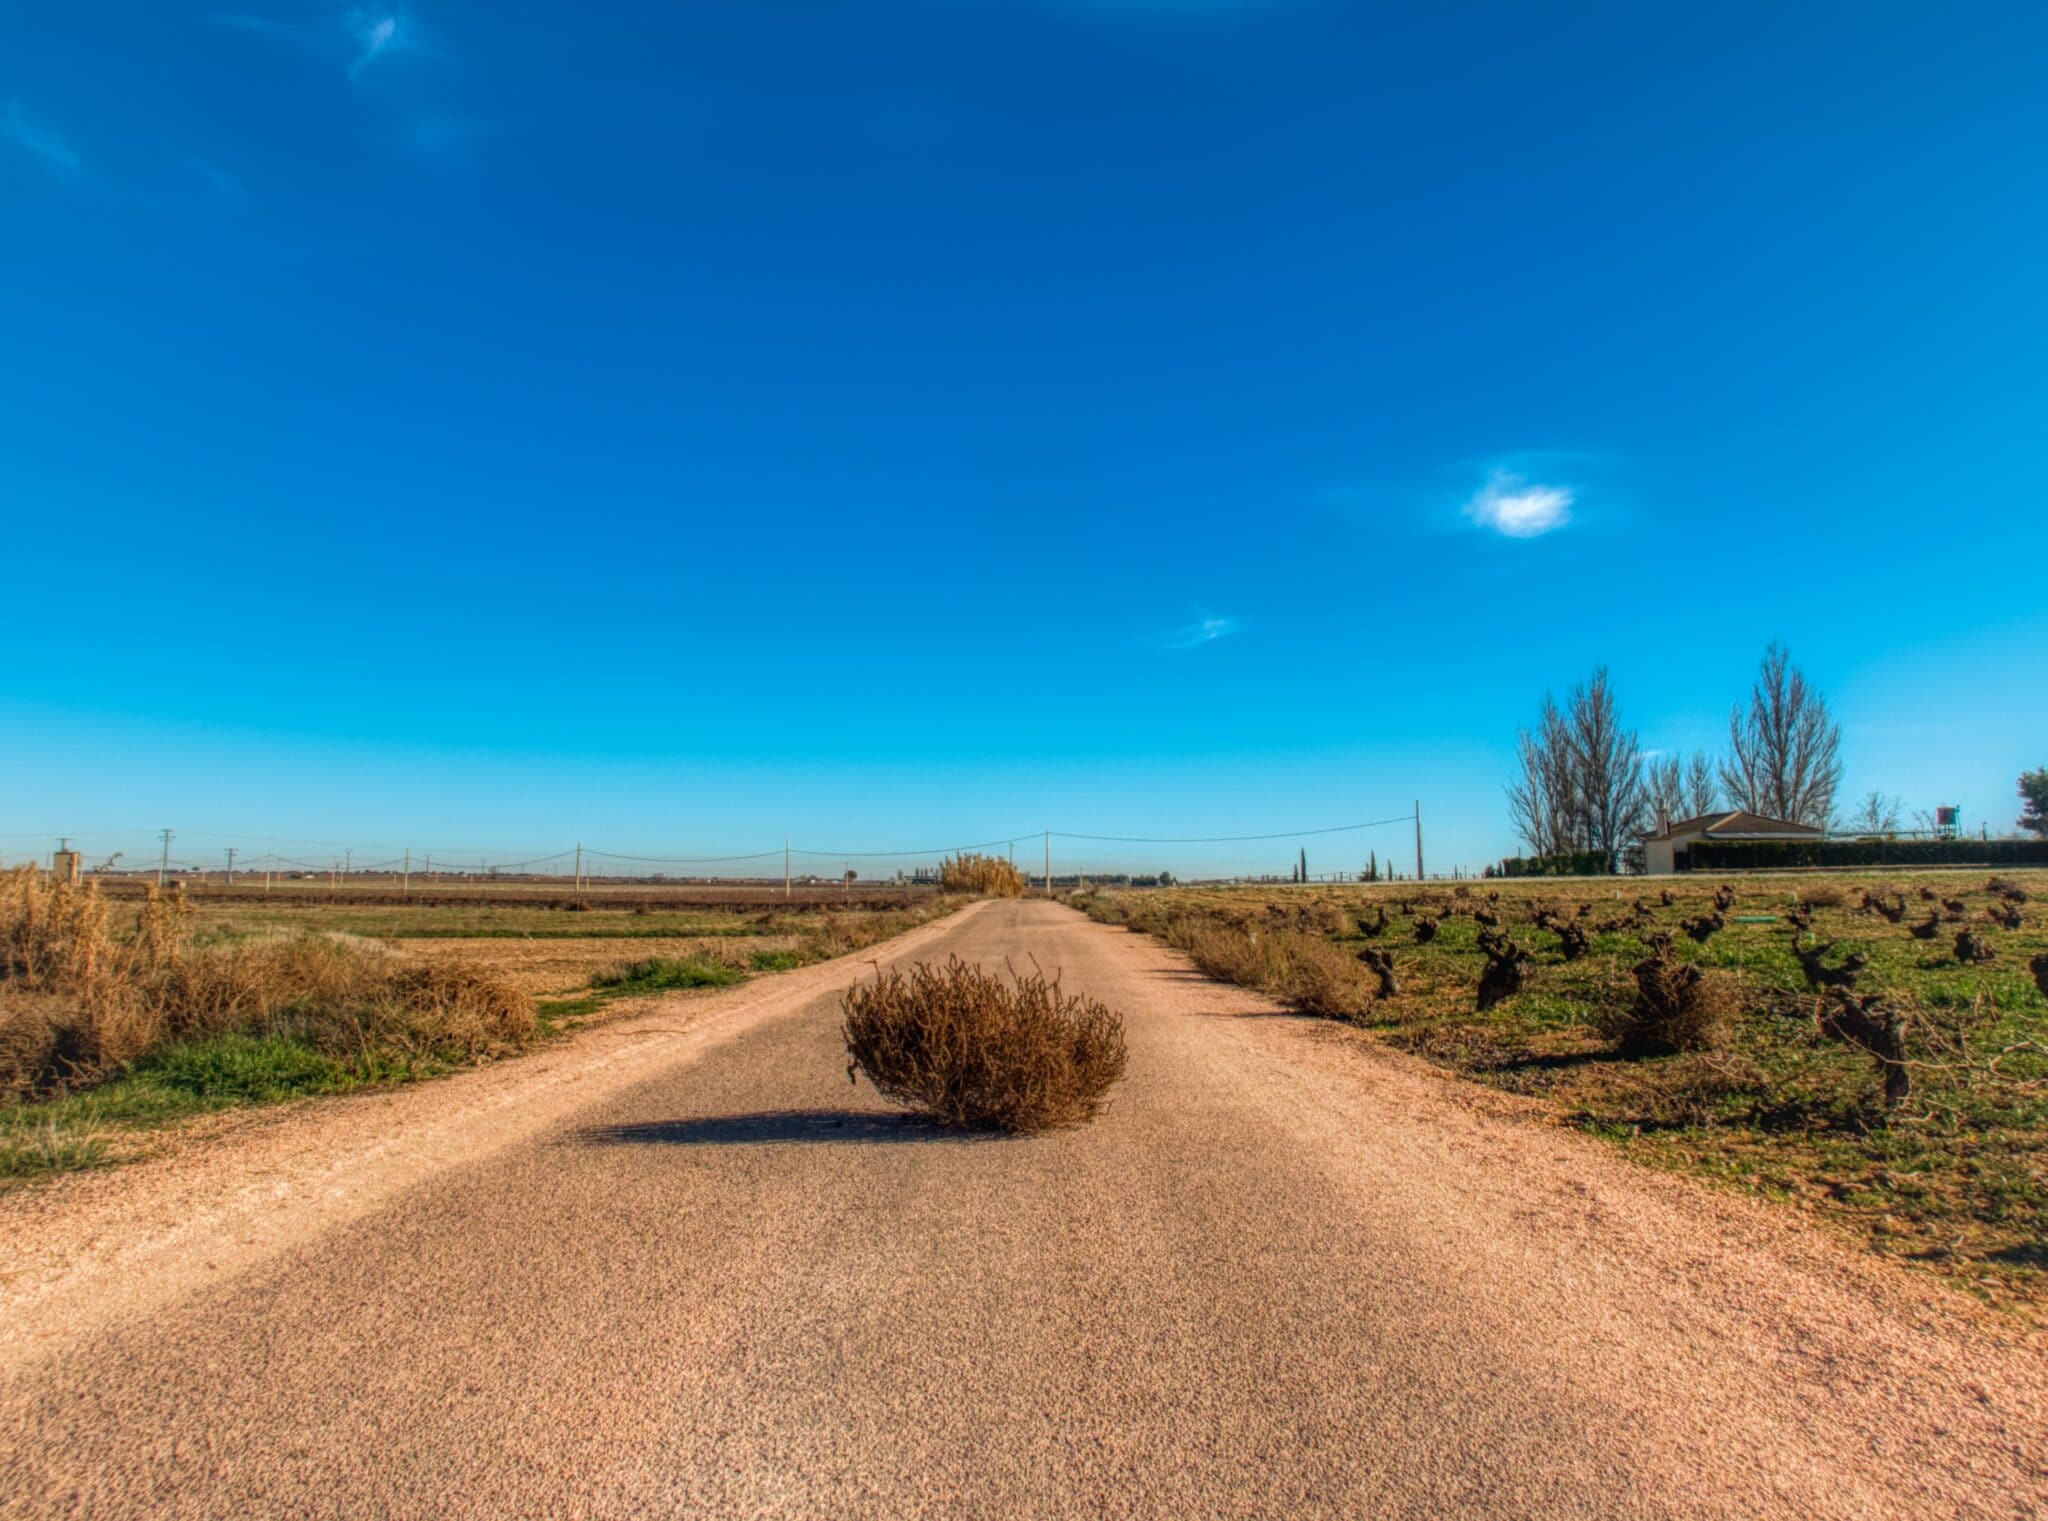 tumbleweed on empty road